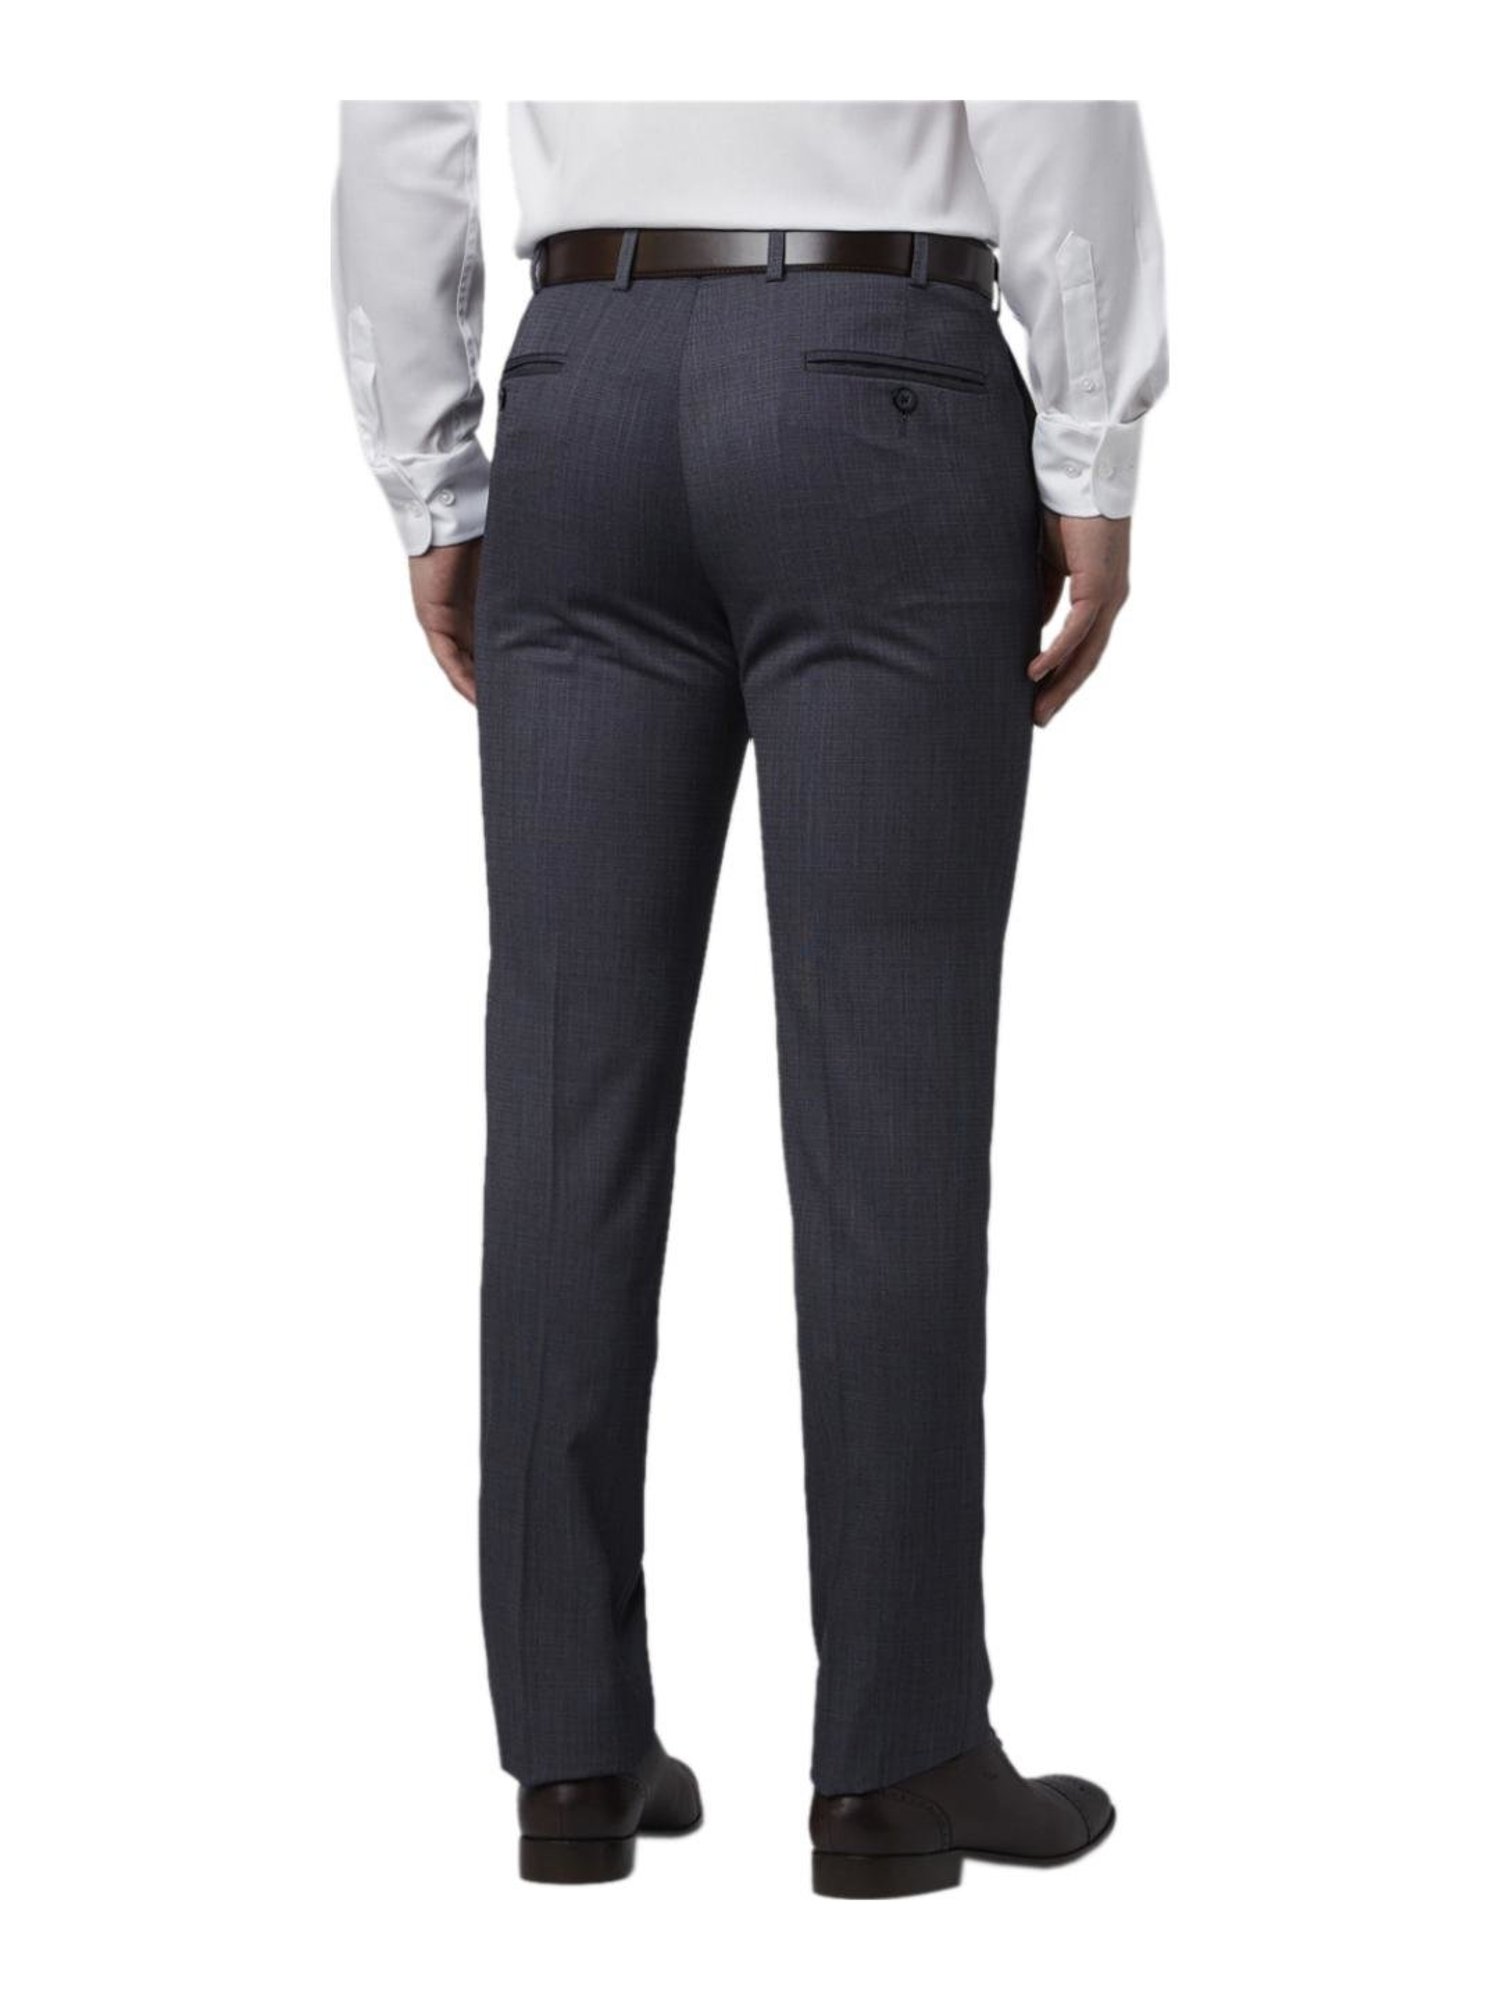 Black Smart Fit Trousers